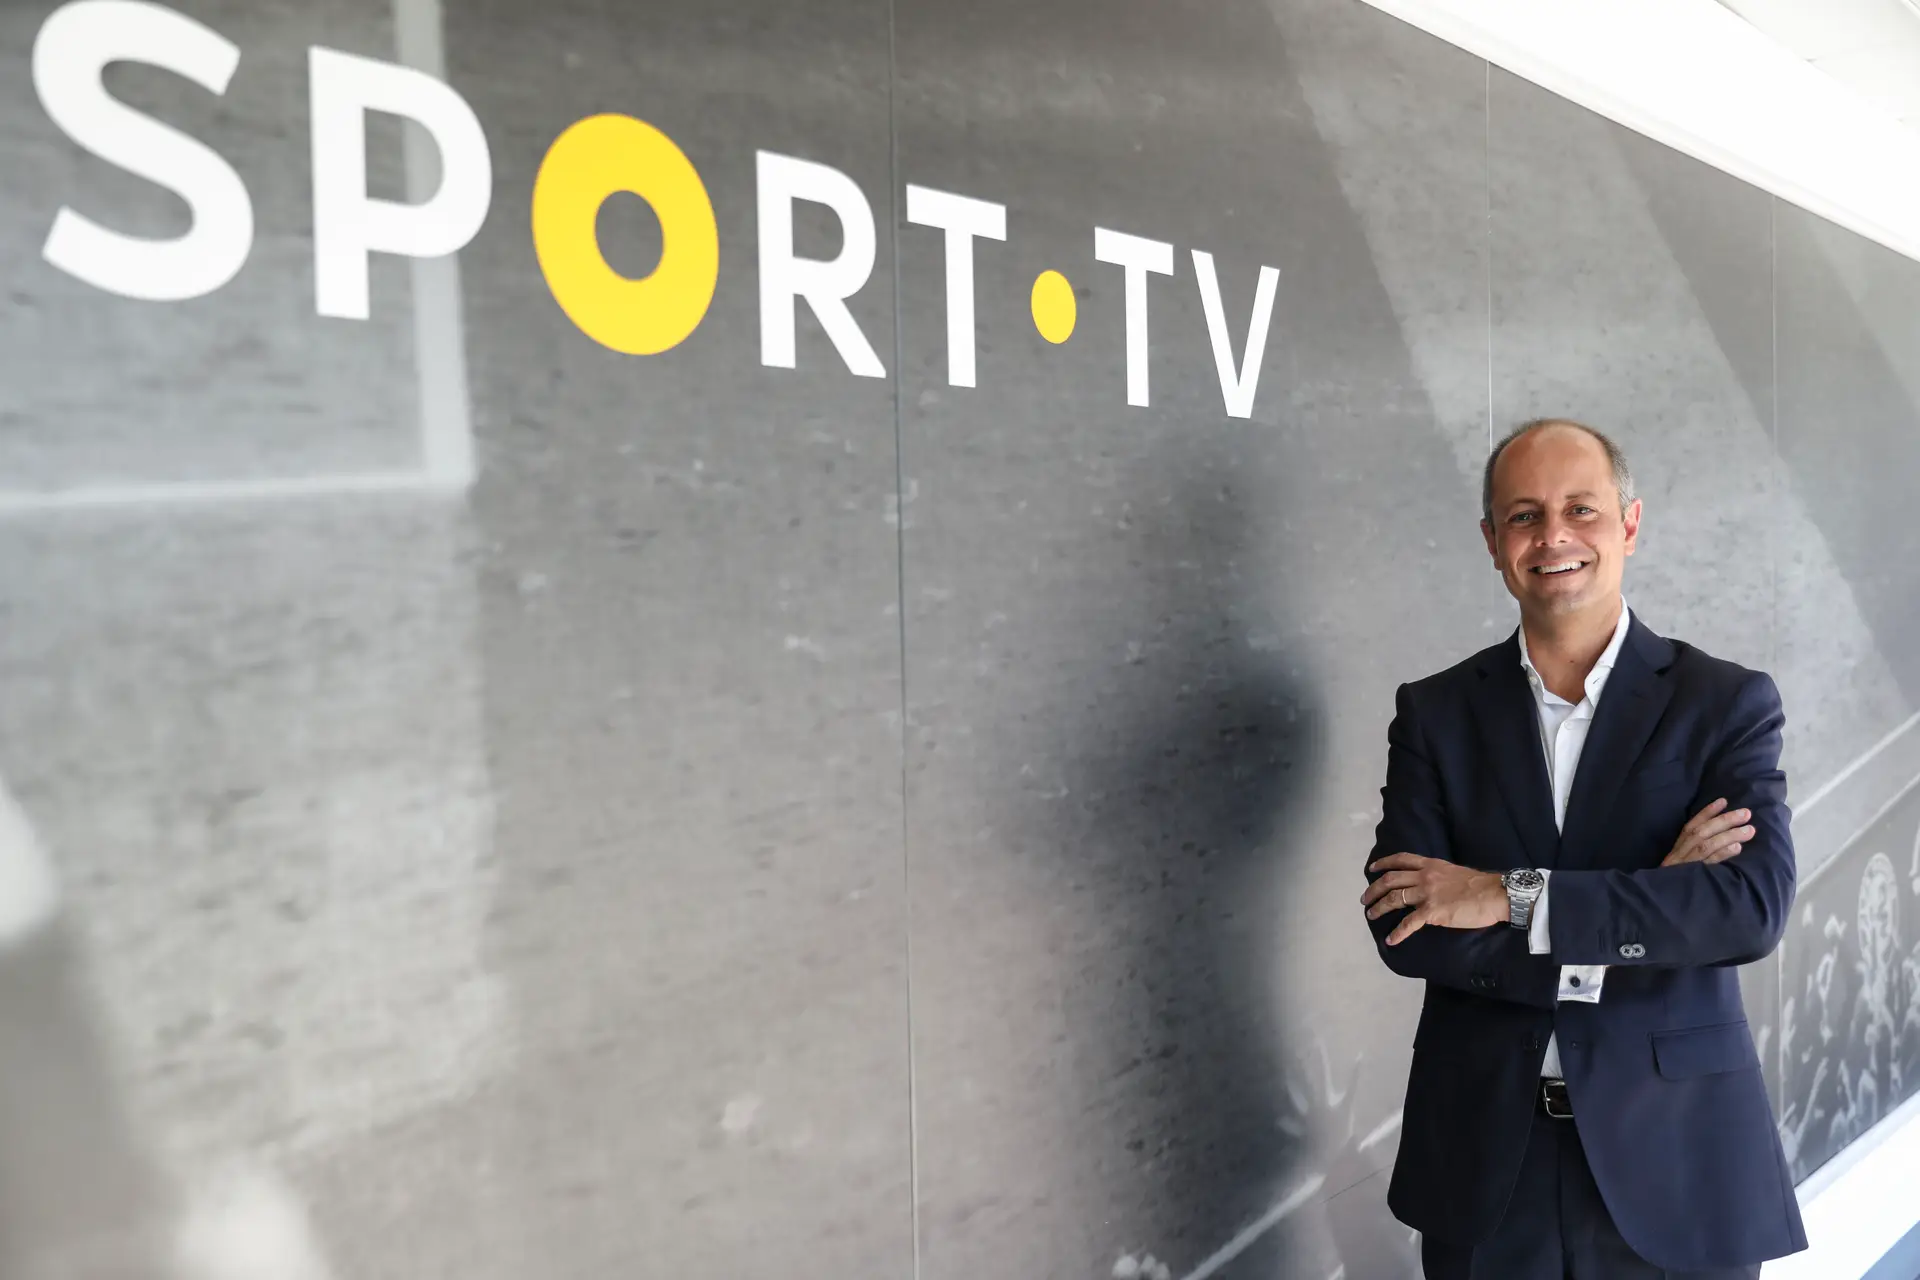 Sport TV Portugal 